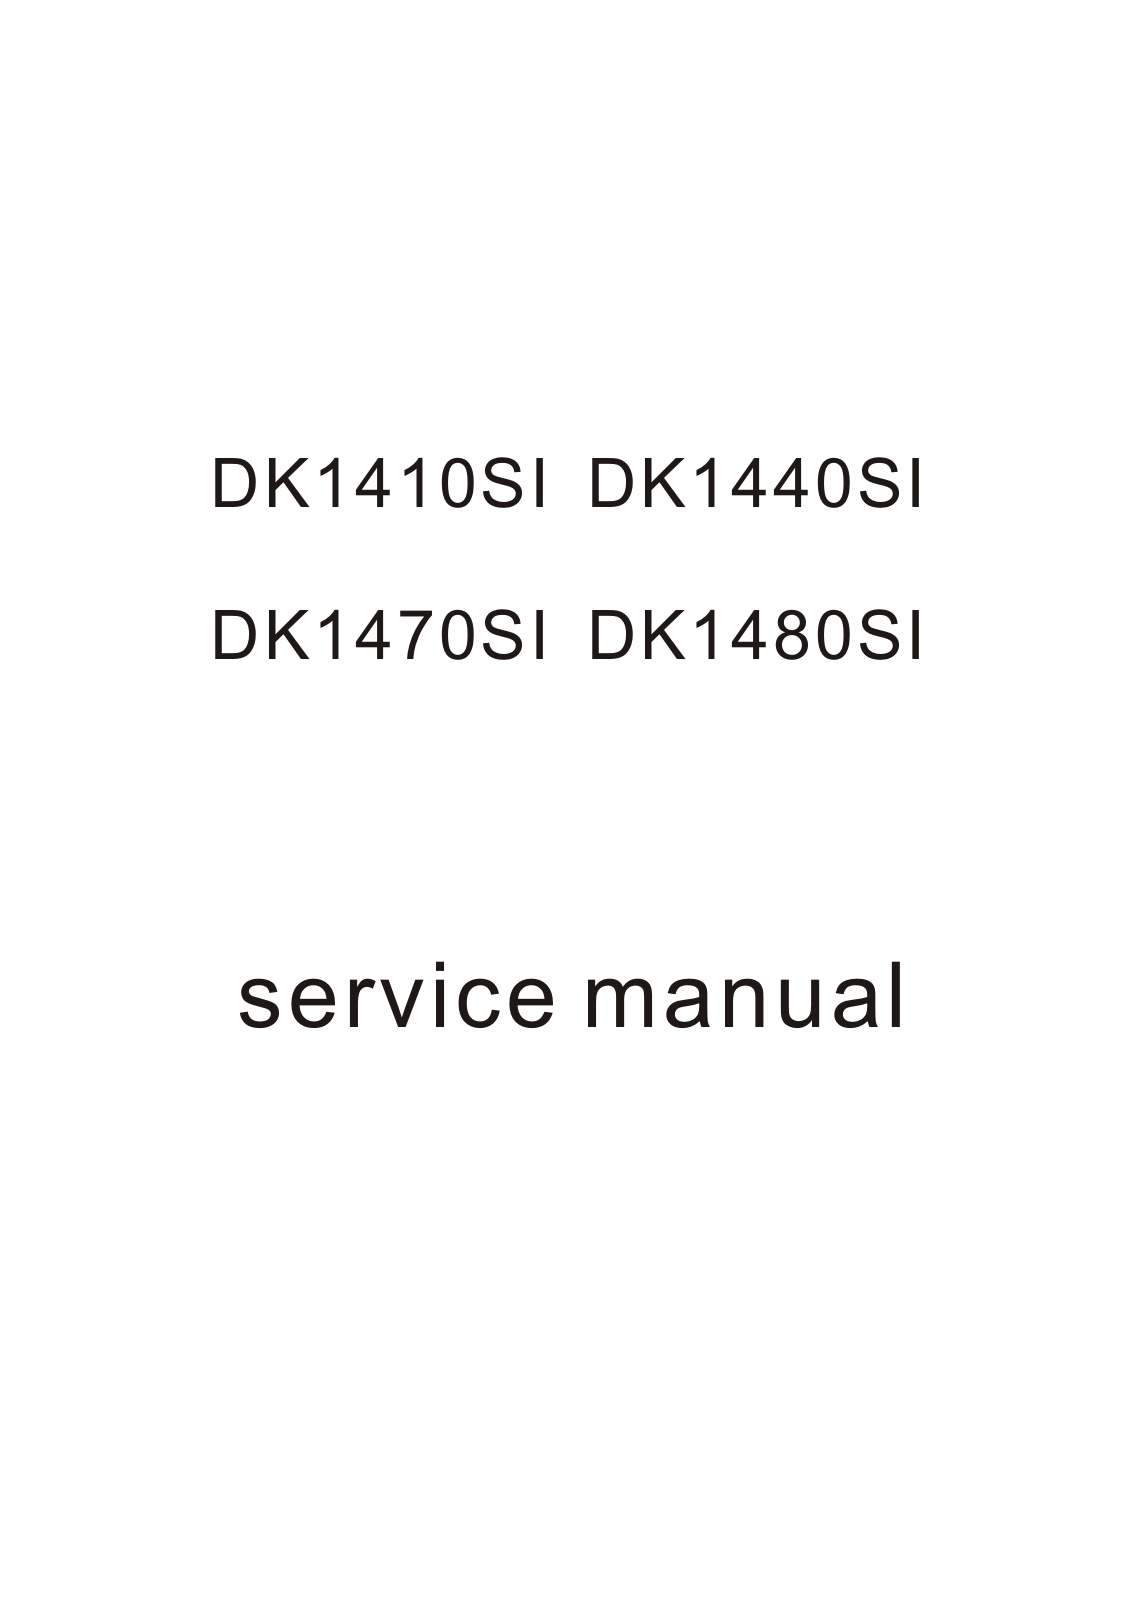 BBK DK1410, DK1430, DK1440, DK1450, DK1460SI Service Manual